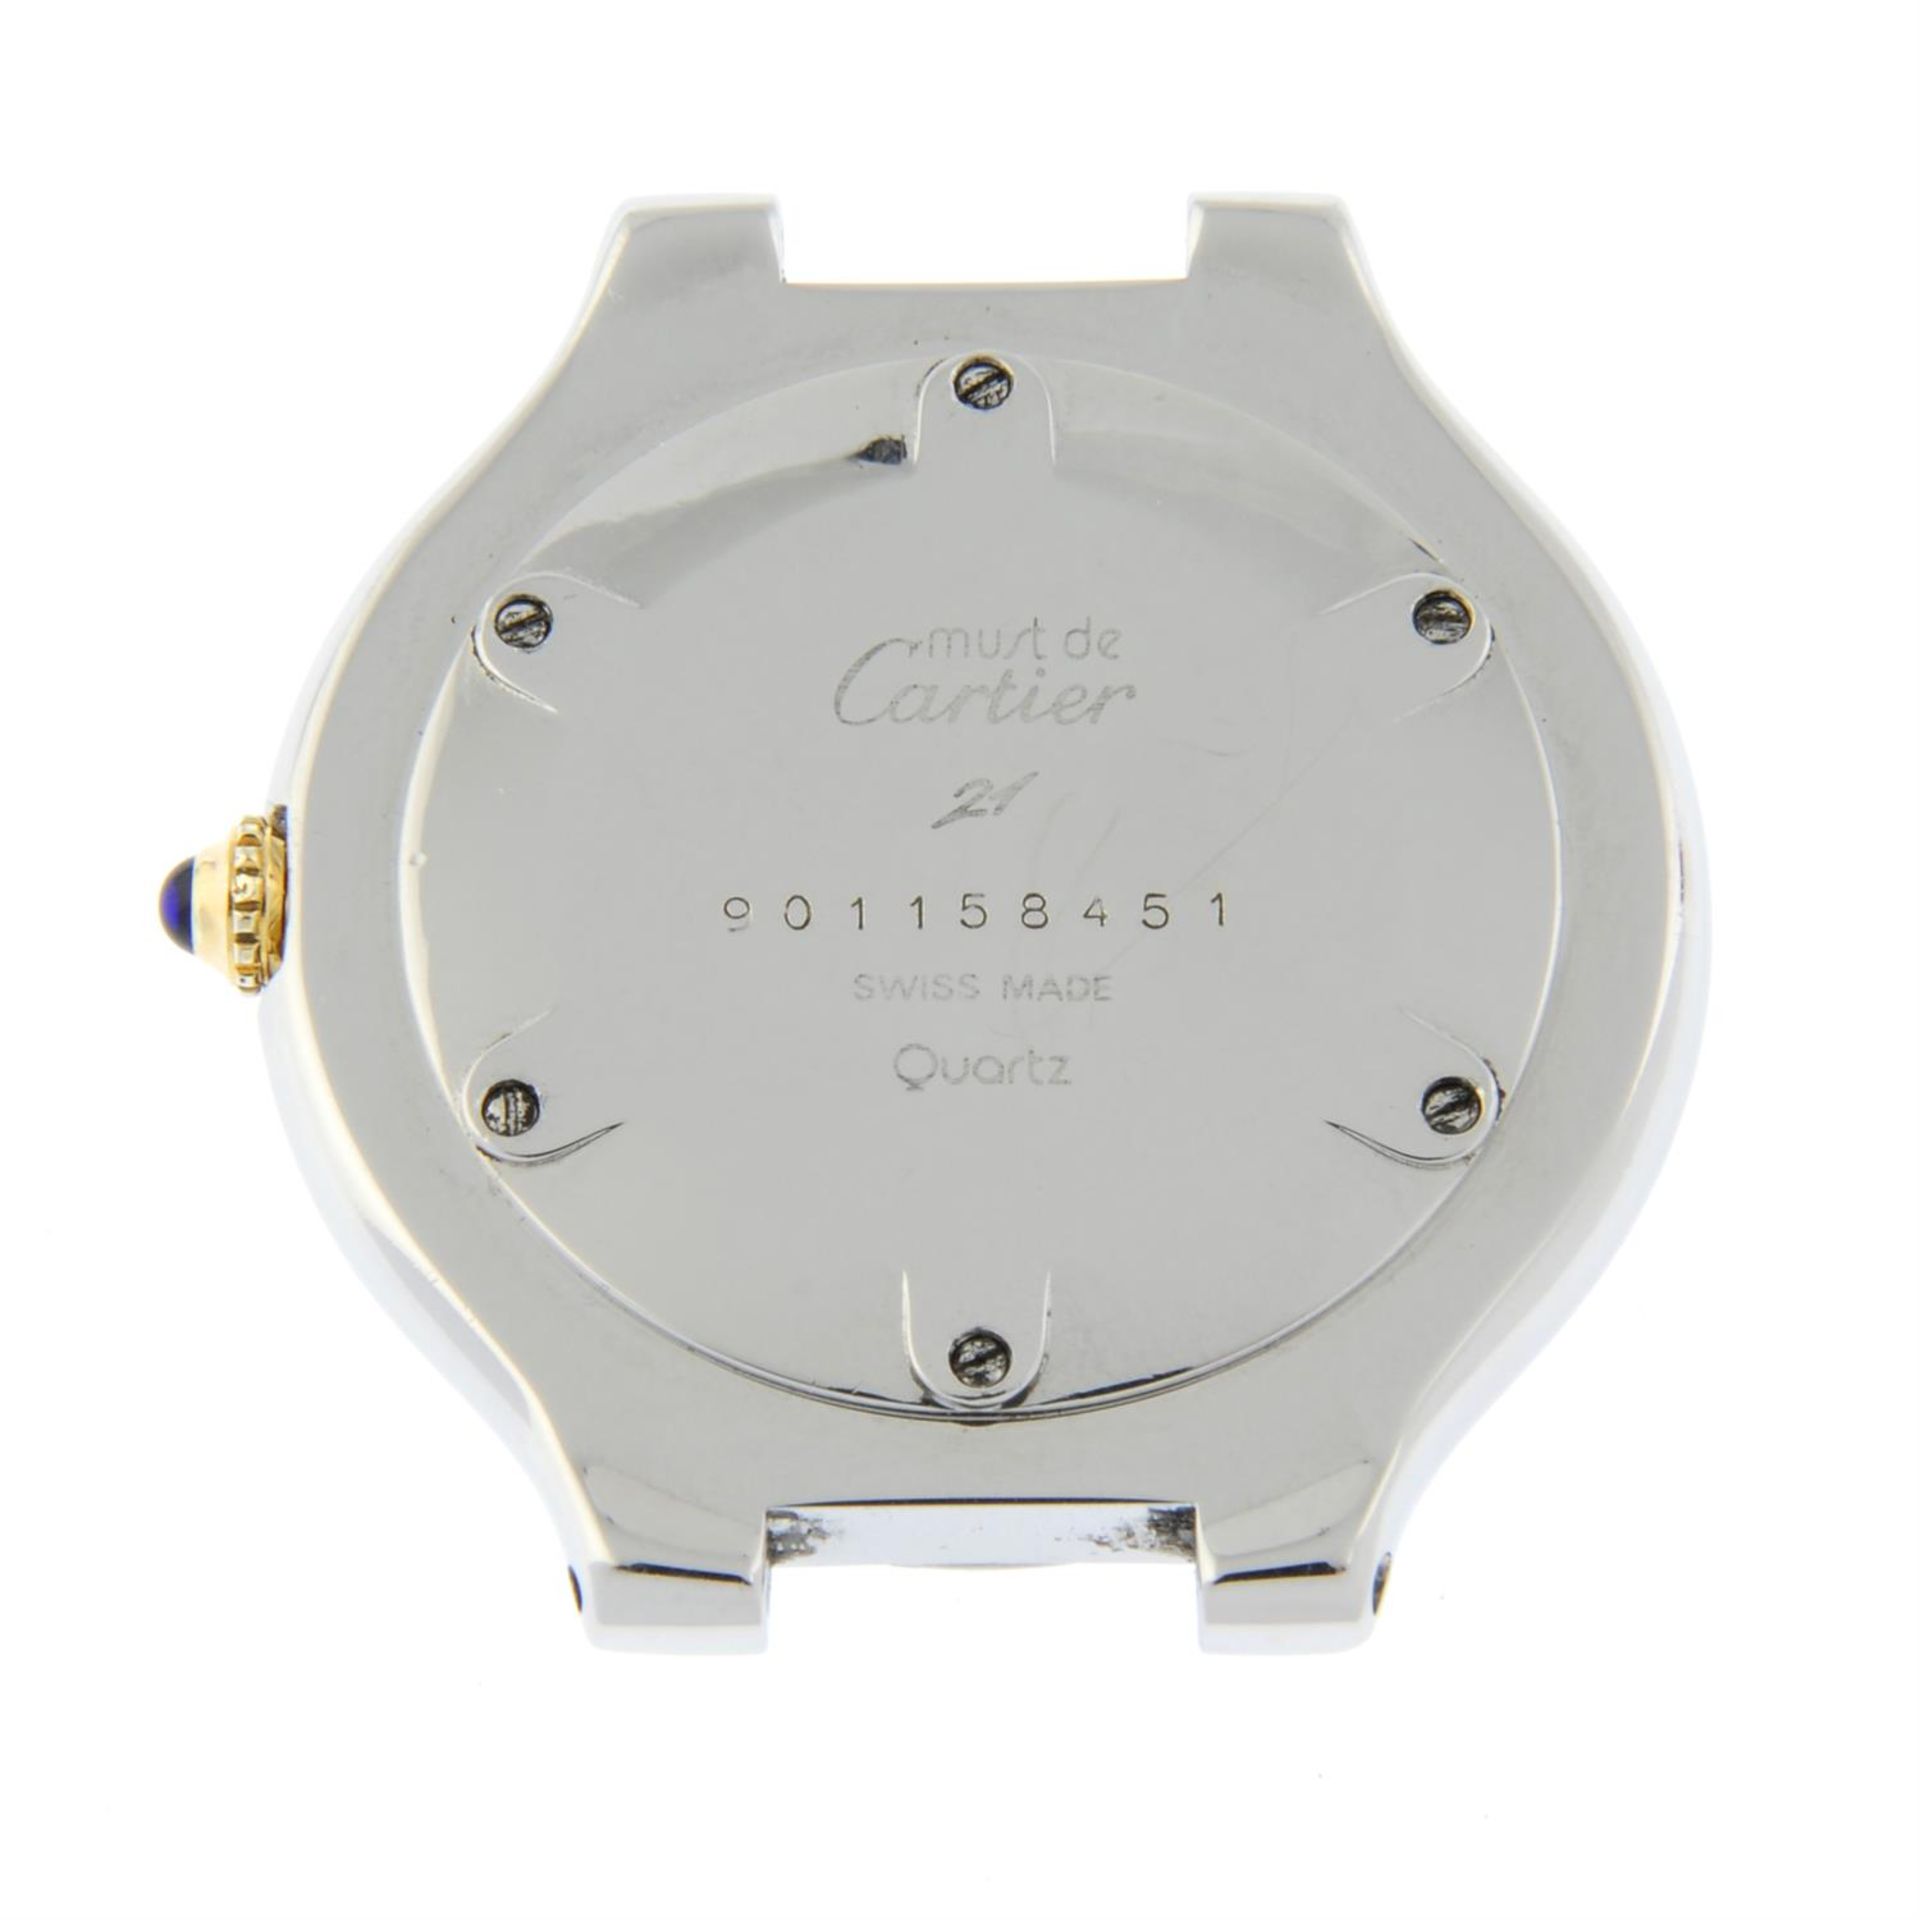 CARTIER - a stainless steel Must de Cartier 21 watch head, 35mm. - Image 2 of 2